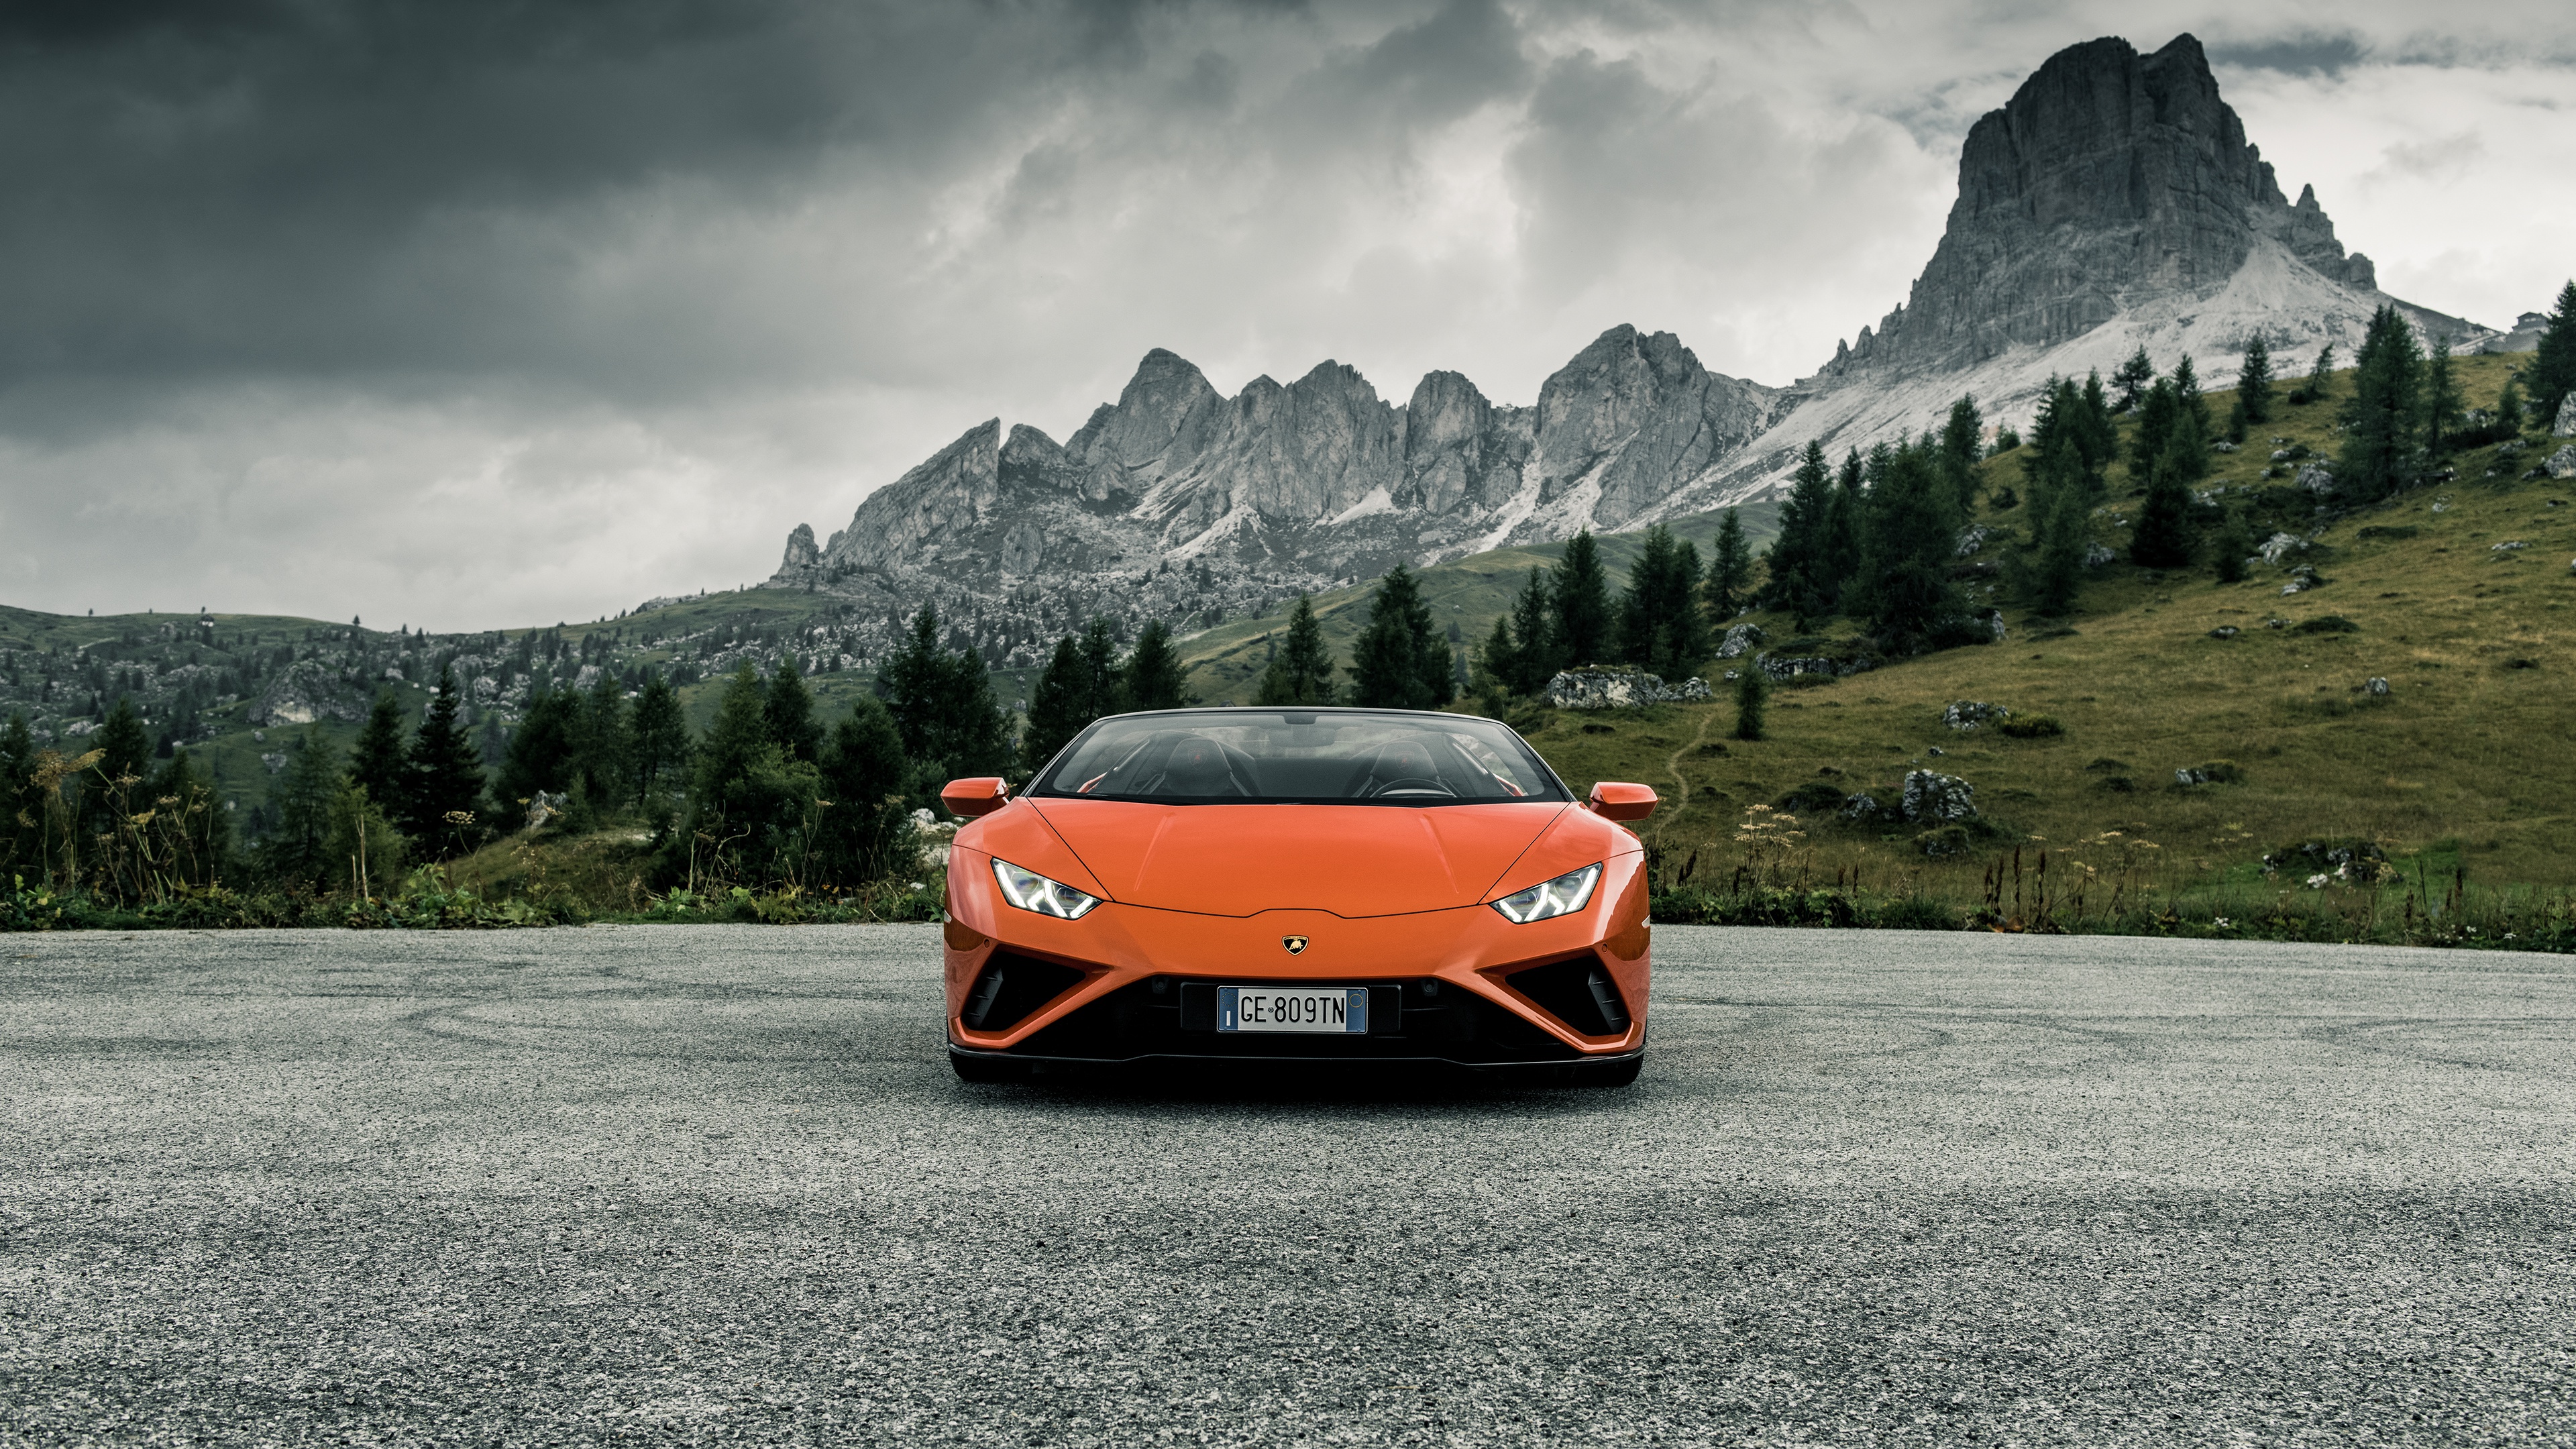 HD desktop wallpaper: Lamborghini, Supercar, Vehicles, Lamborghini Huracán  Evo download free picture #515000